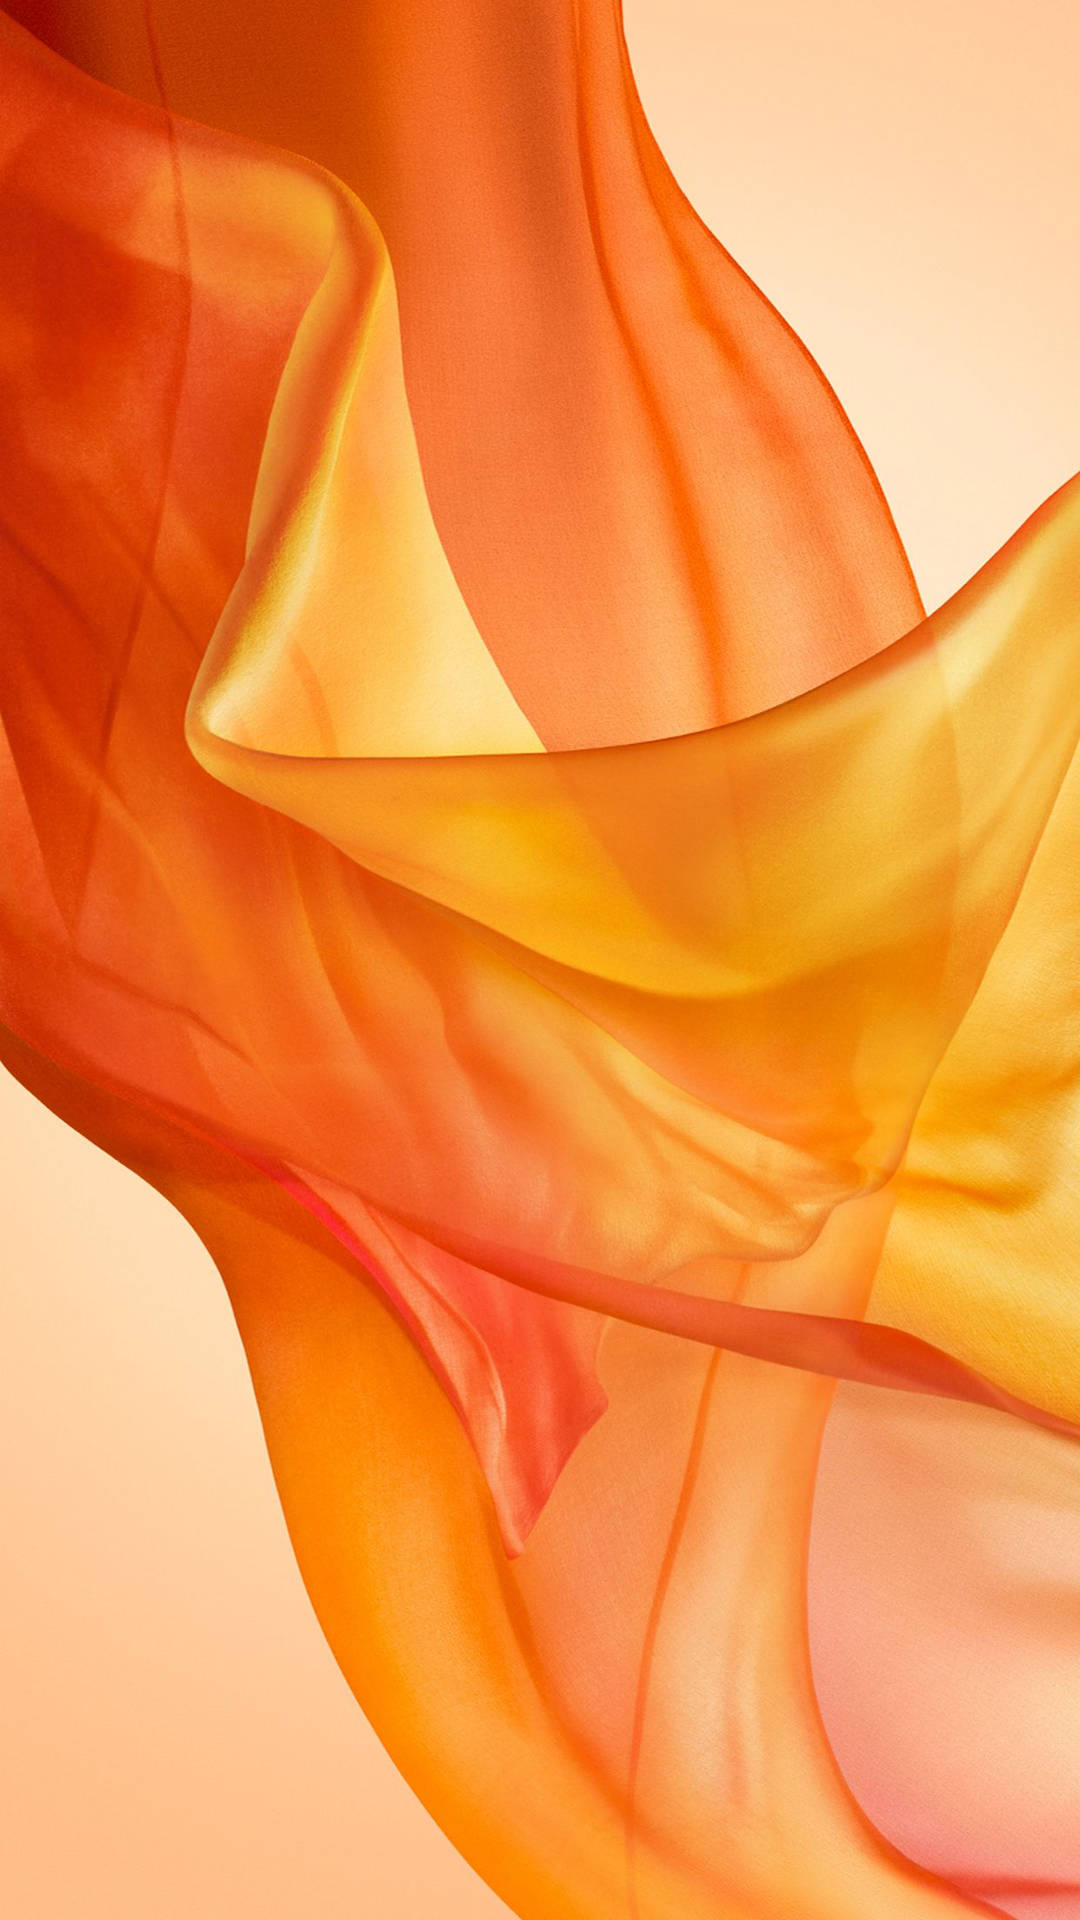 Ipad Pro Orange Cloth Waving